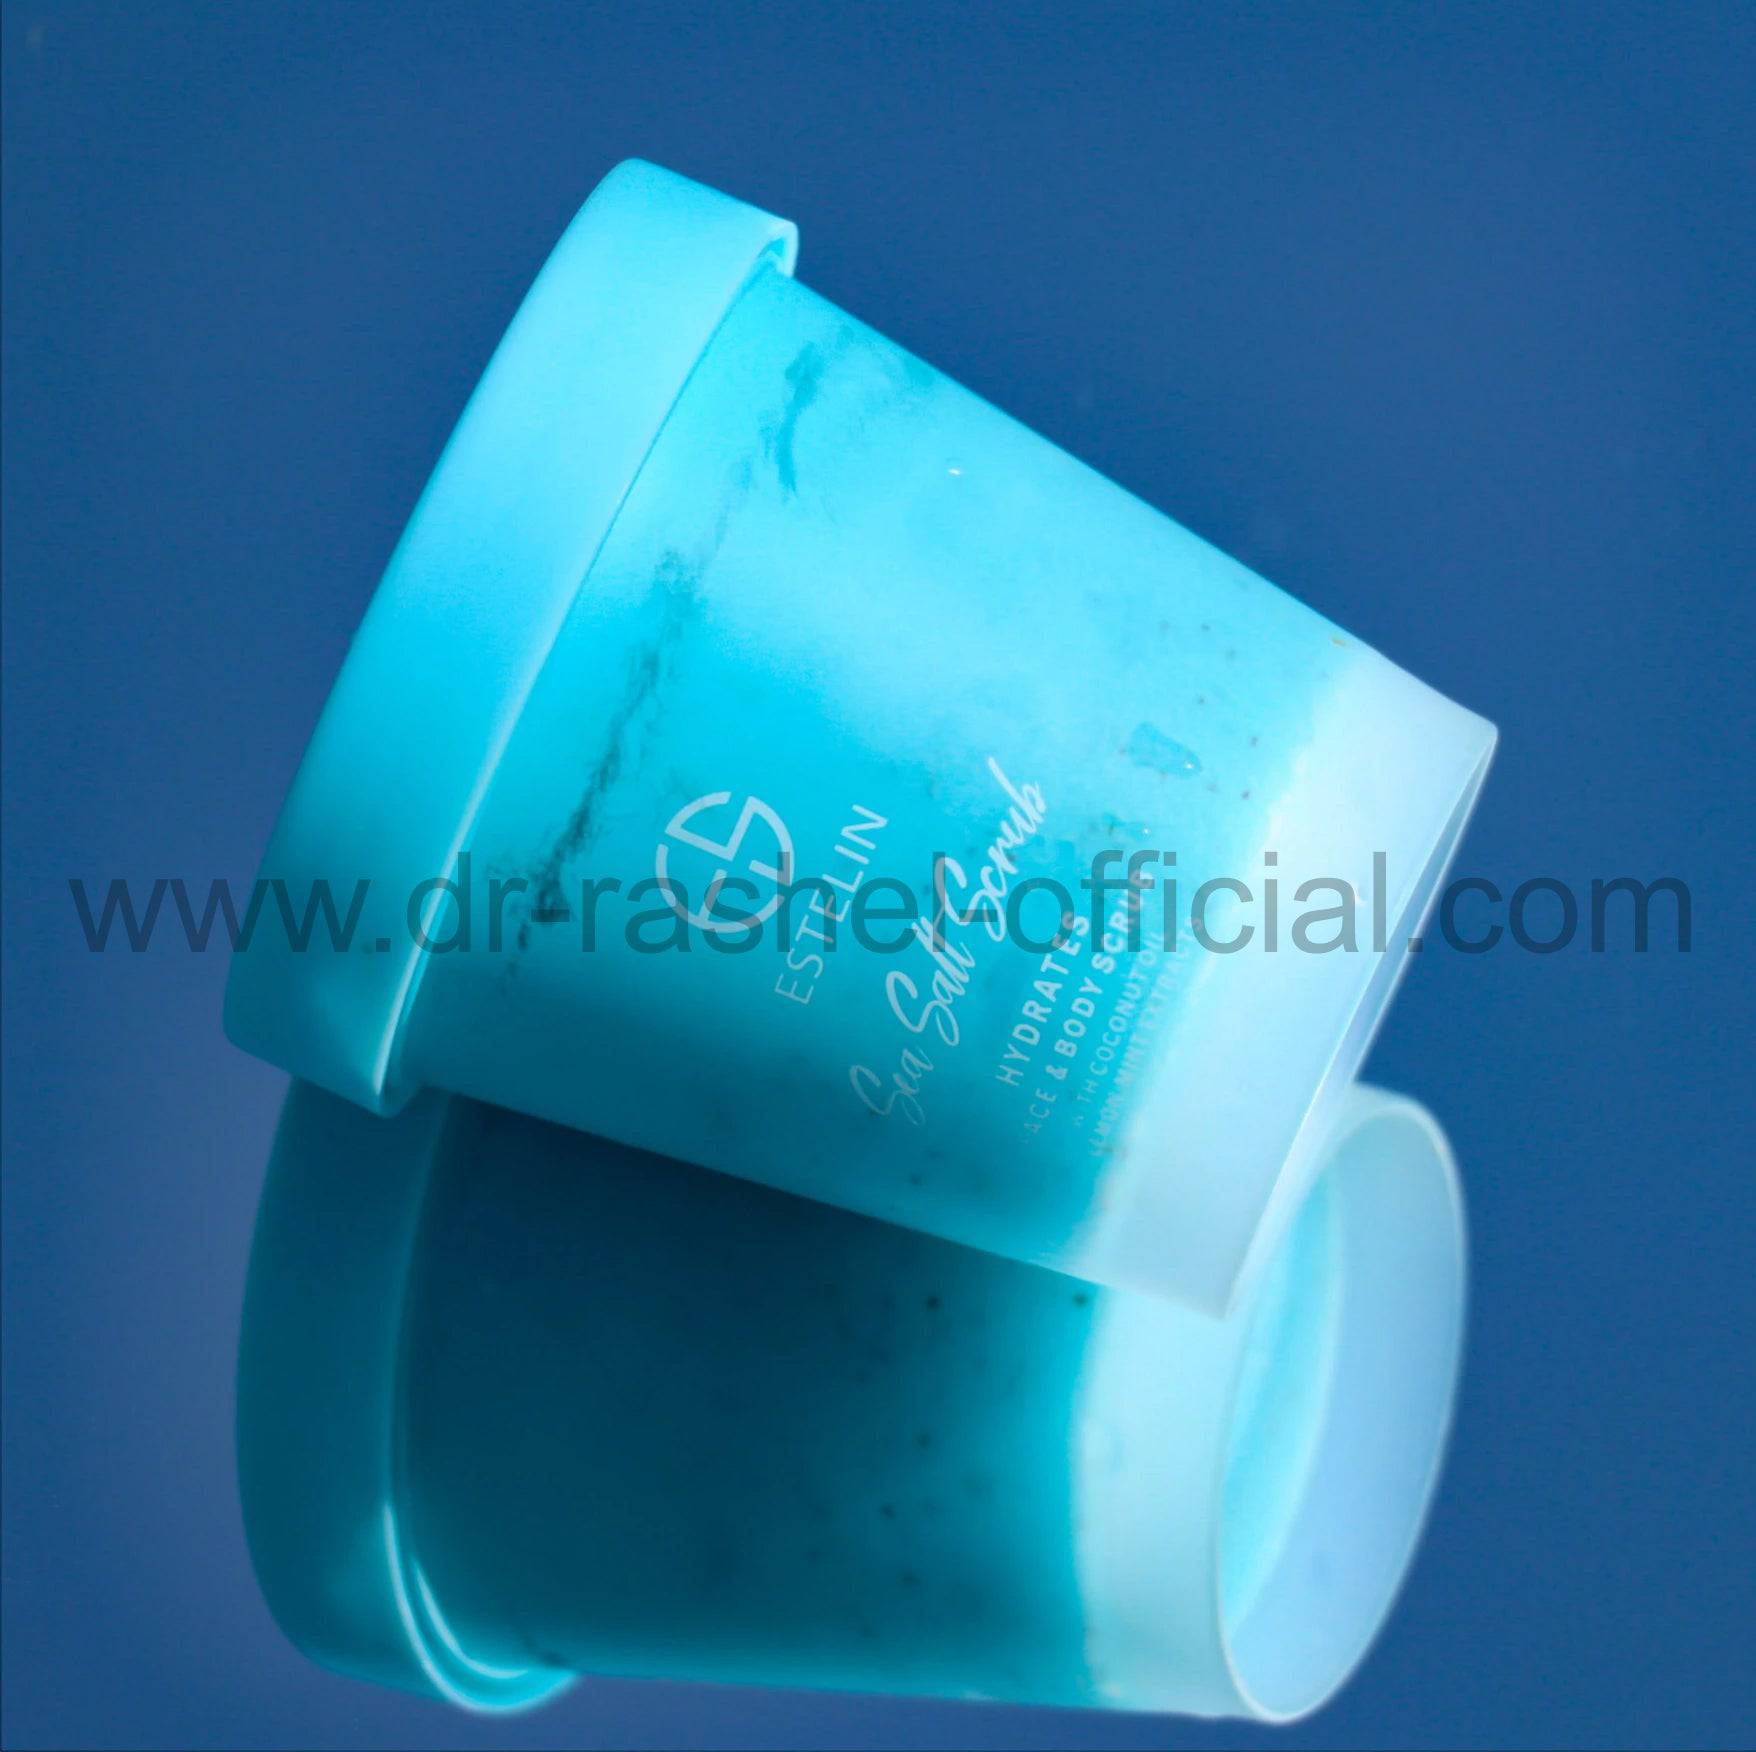 Estelin Sea Salt Scrub Hydrates Face & Body Scrub by Dr.Rashel - 280g - Dr.Rashel - Face & Body Scrub - Dr-Rashel-Official